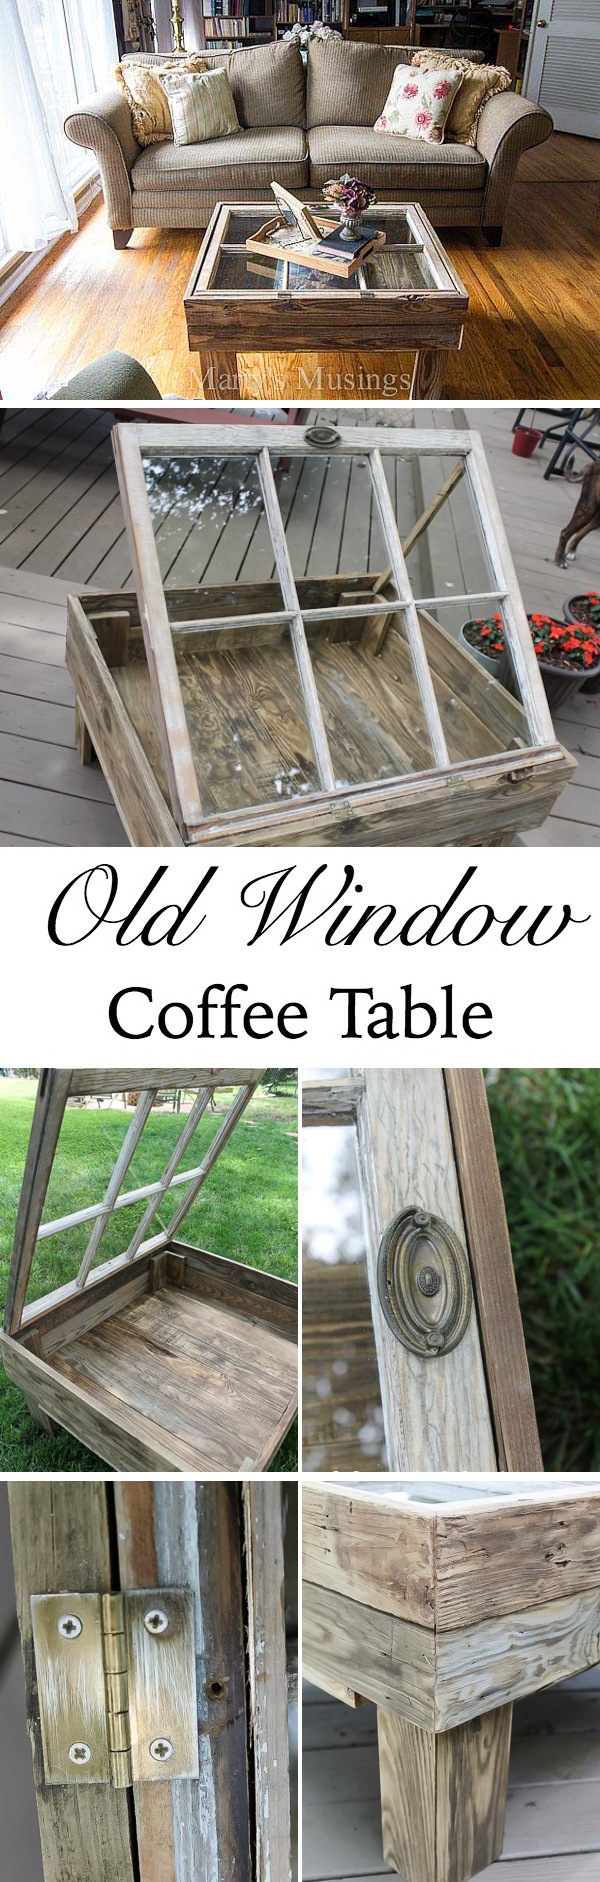 Old Window Coffee Table